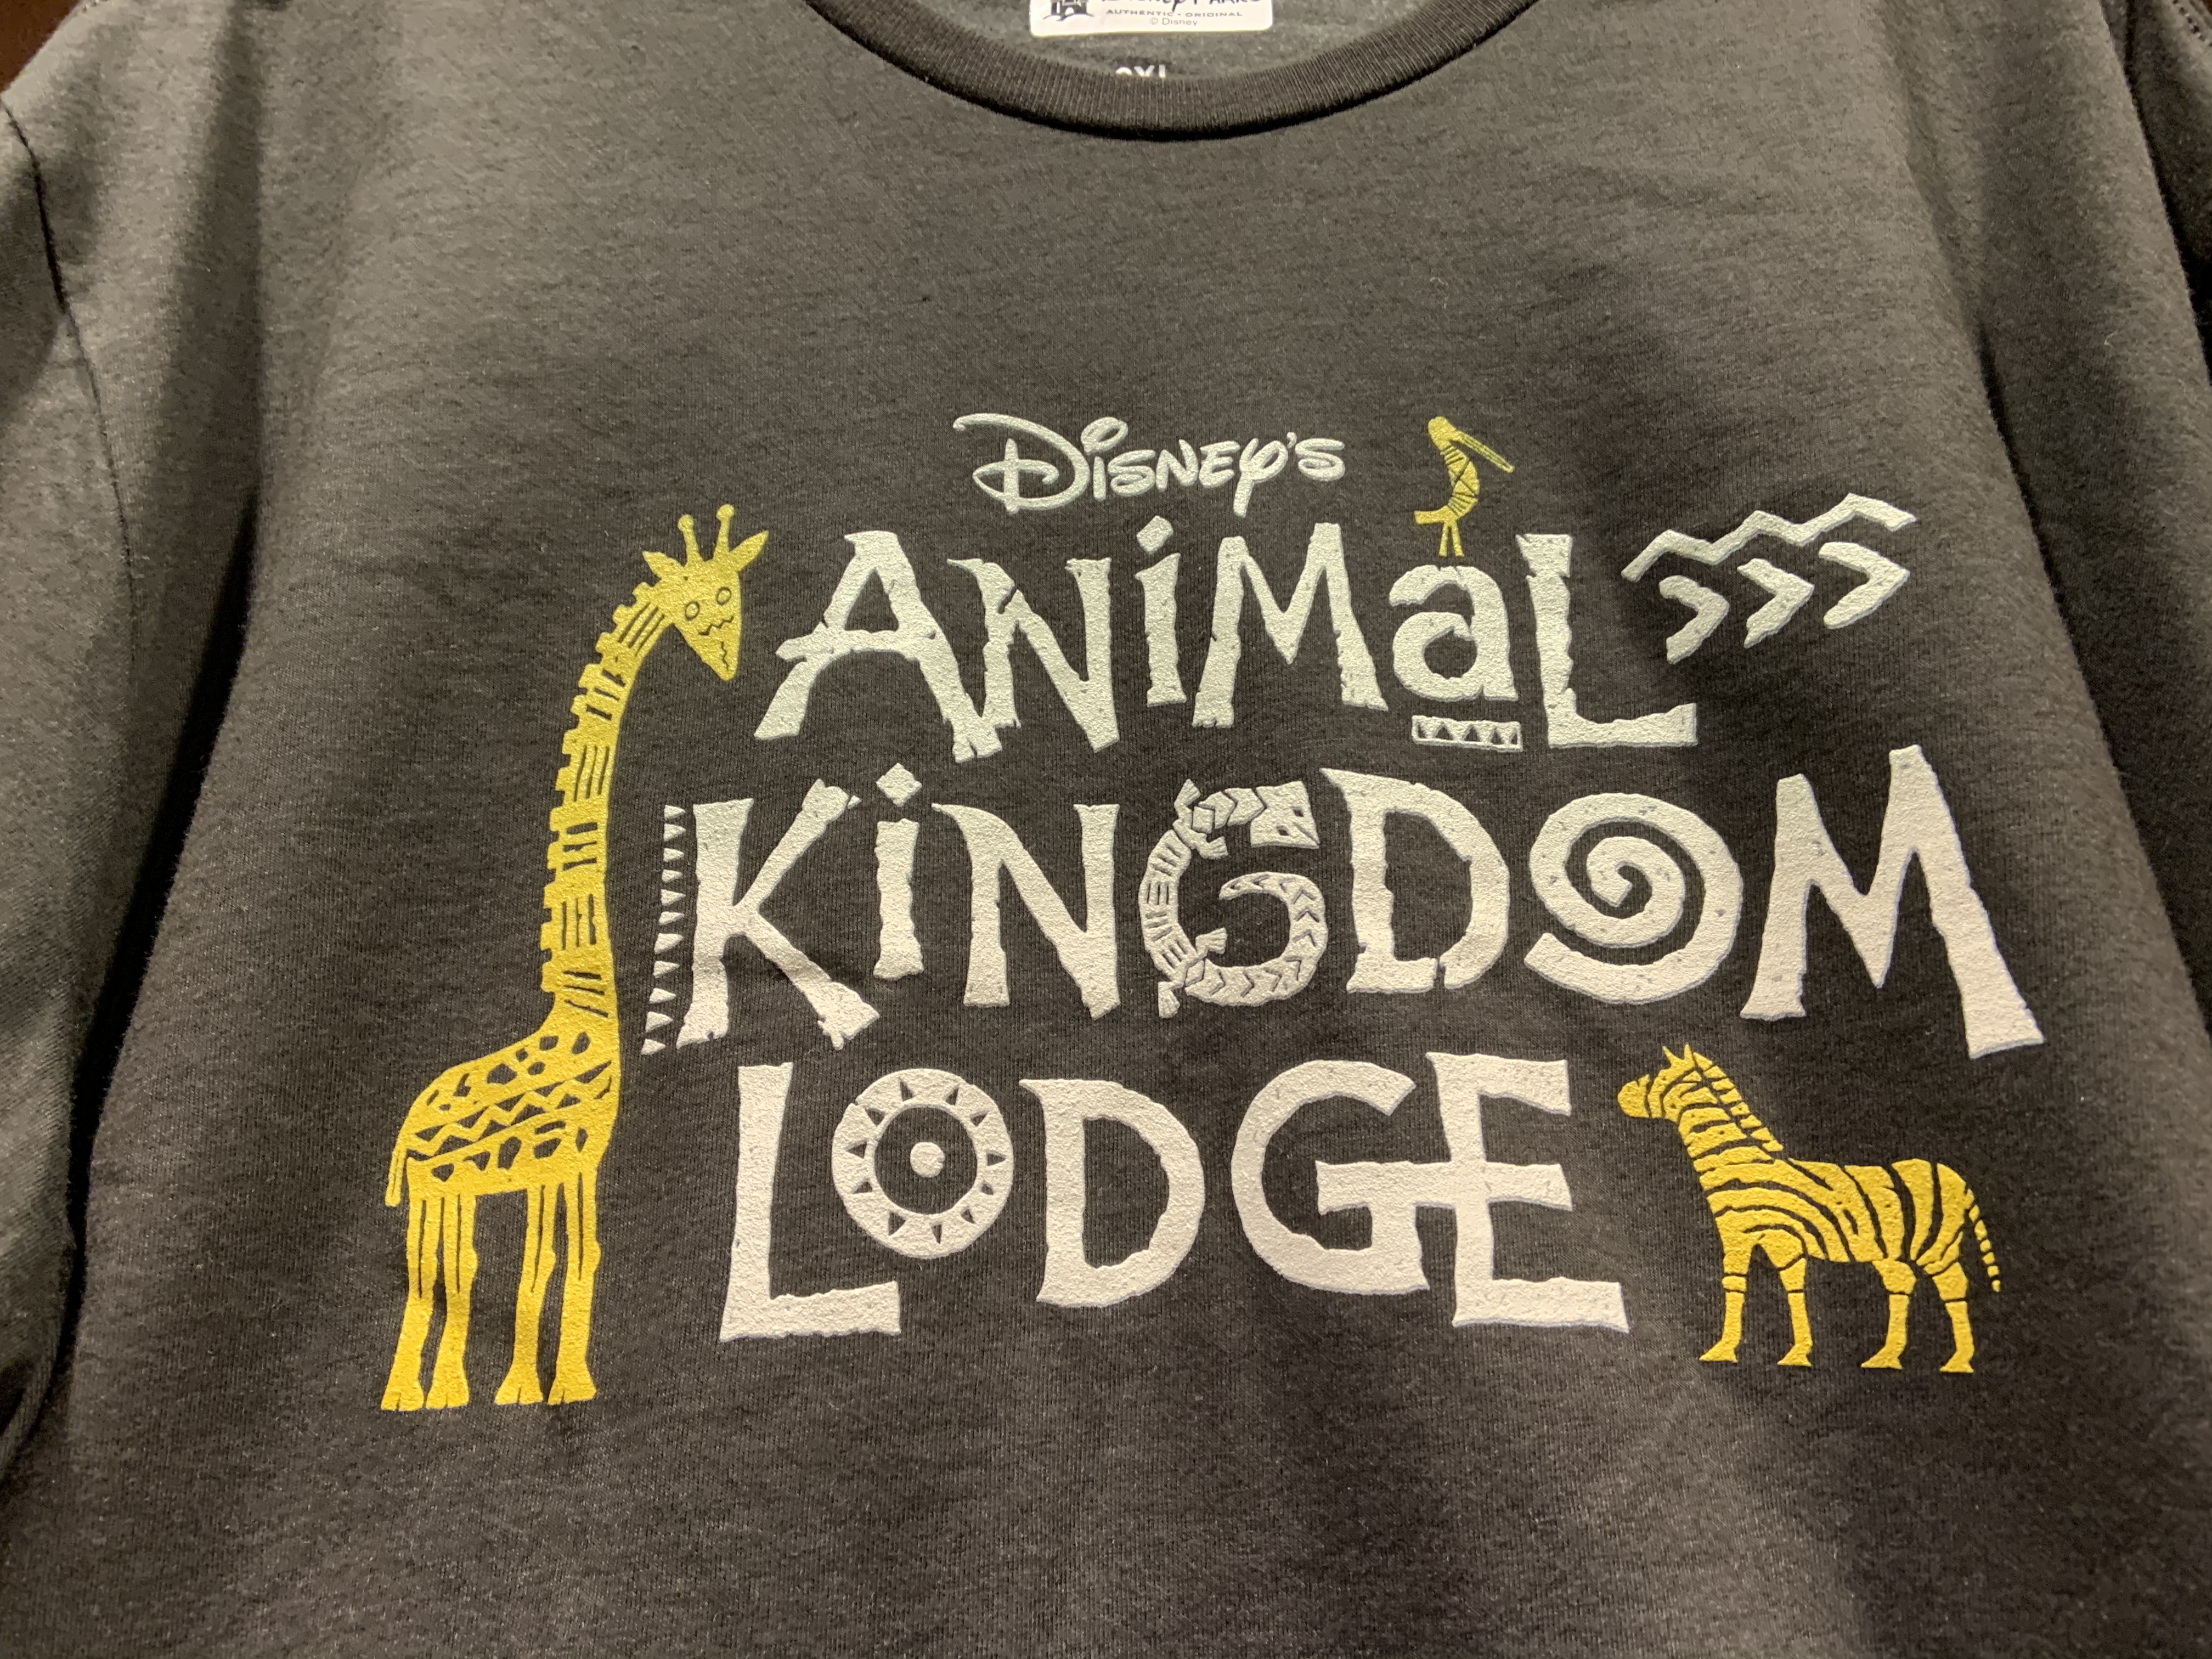 Animal Kingdom Lodge Merchandise 11/25/19 2